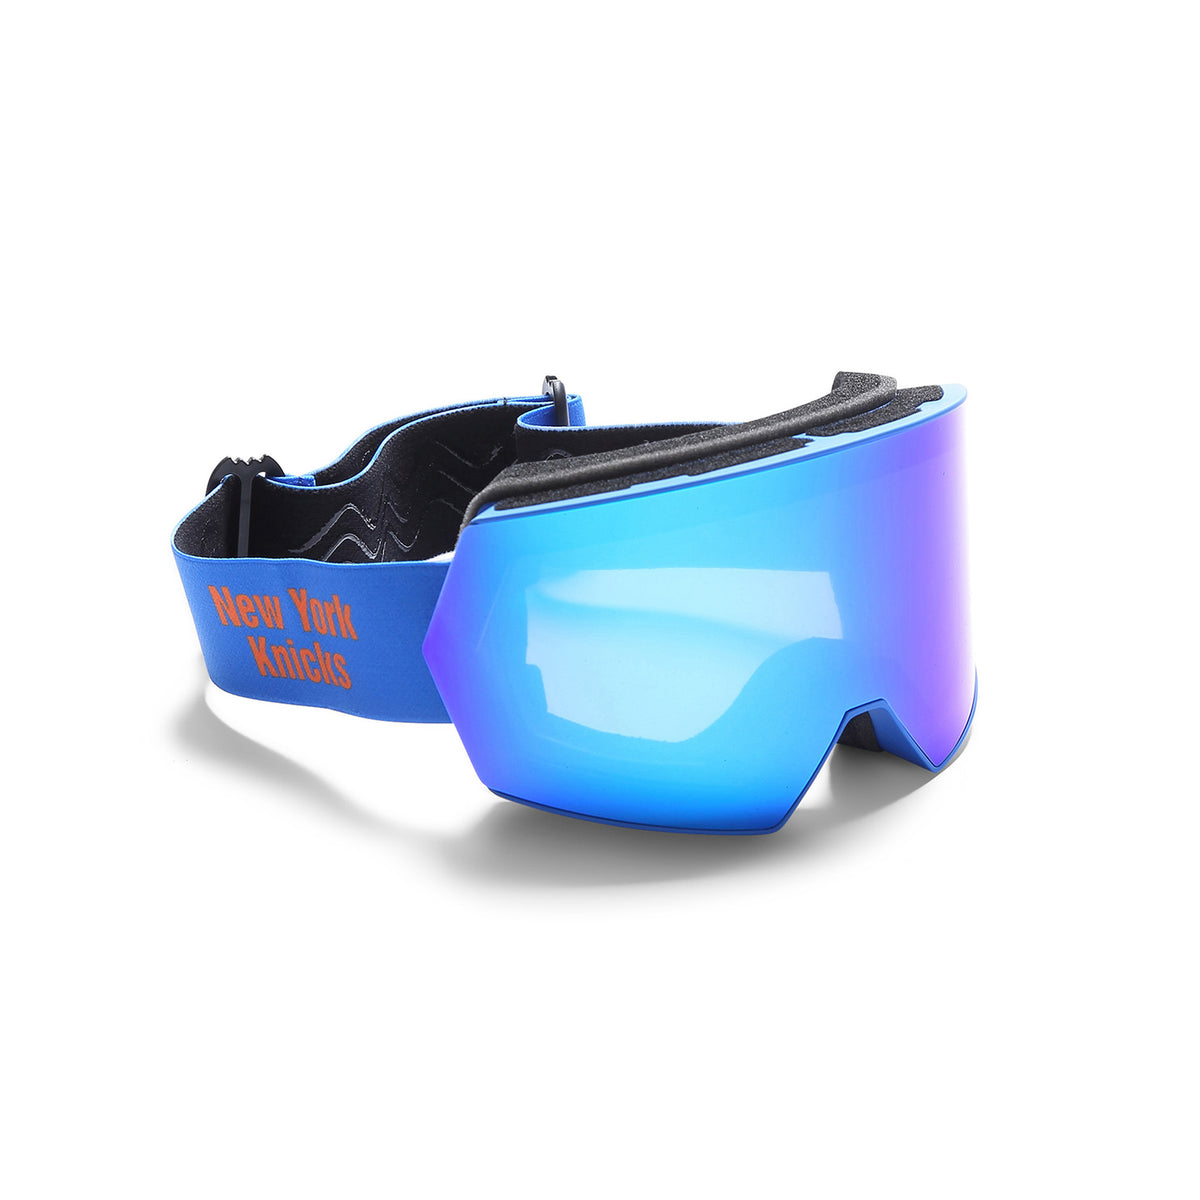 New York Knicks Ski Goggles